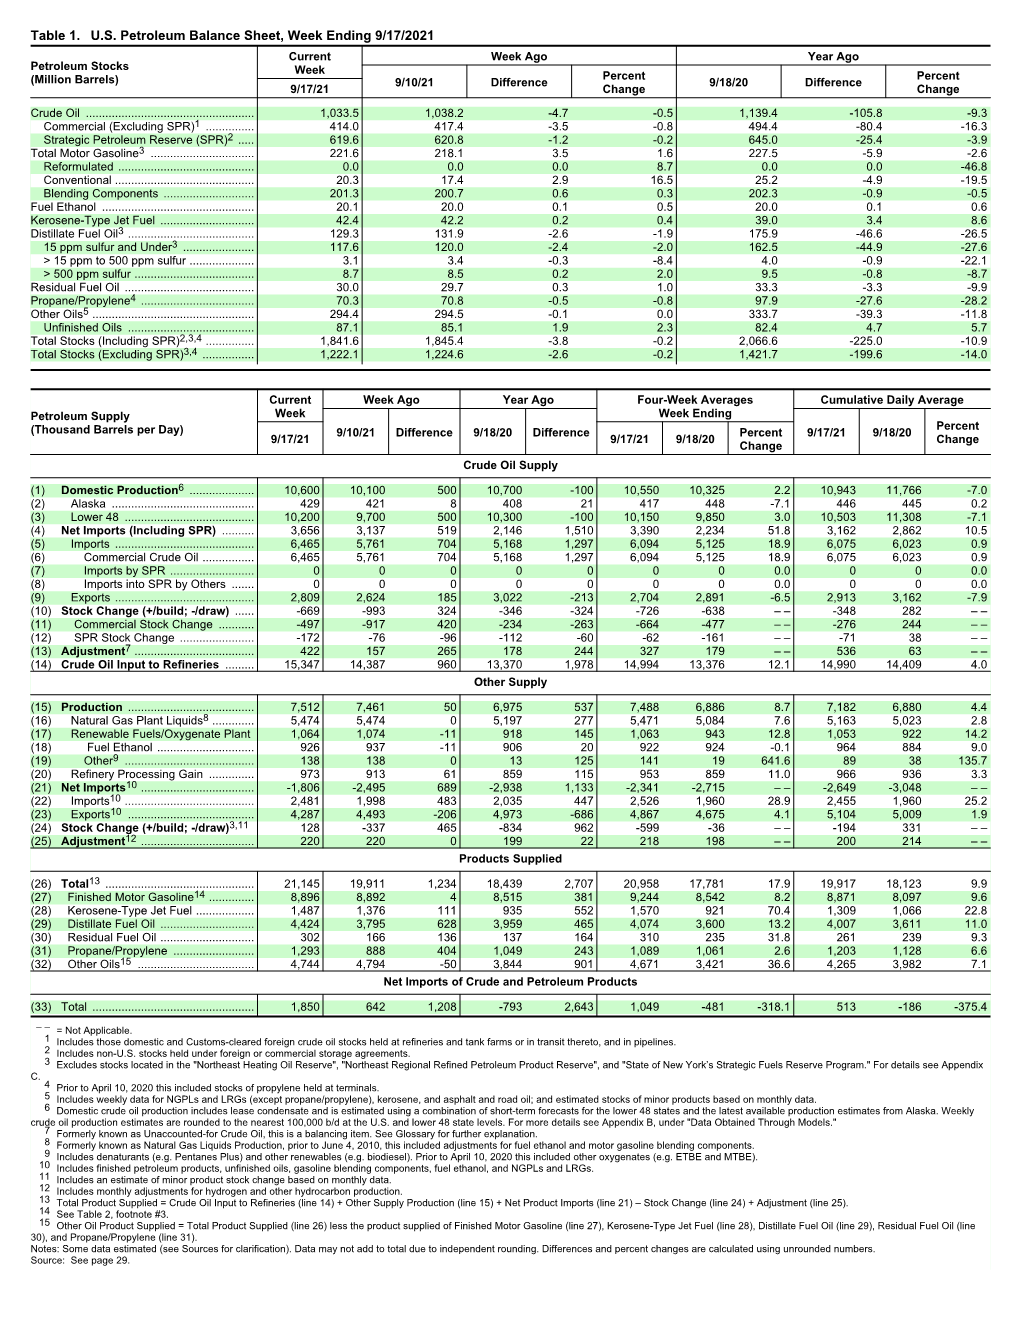 Weekly Petroleum Status Report